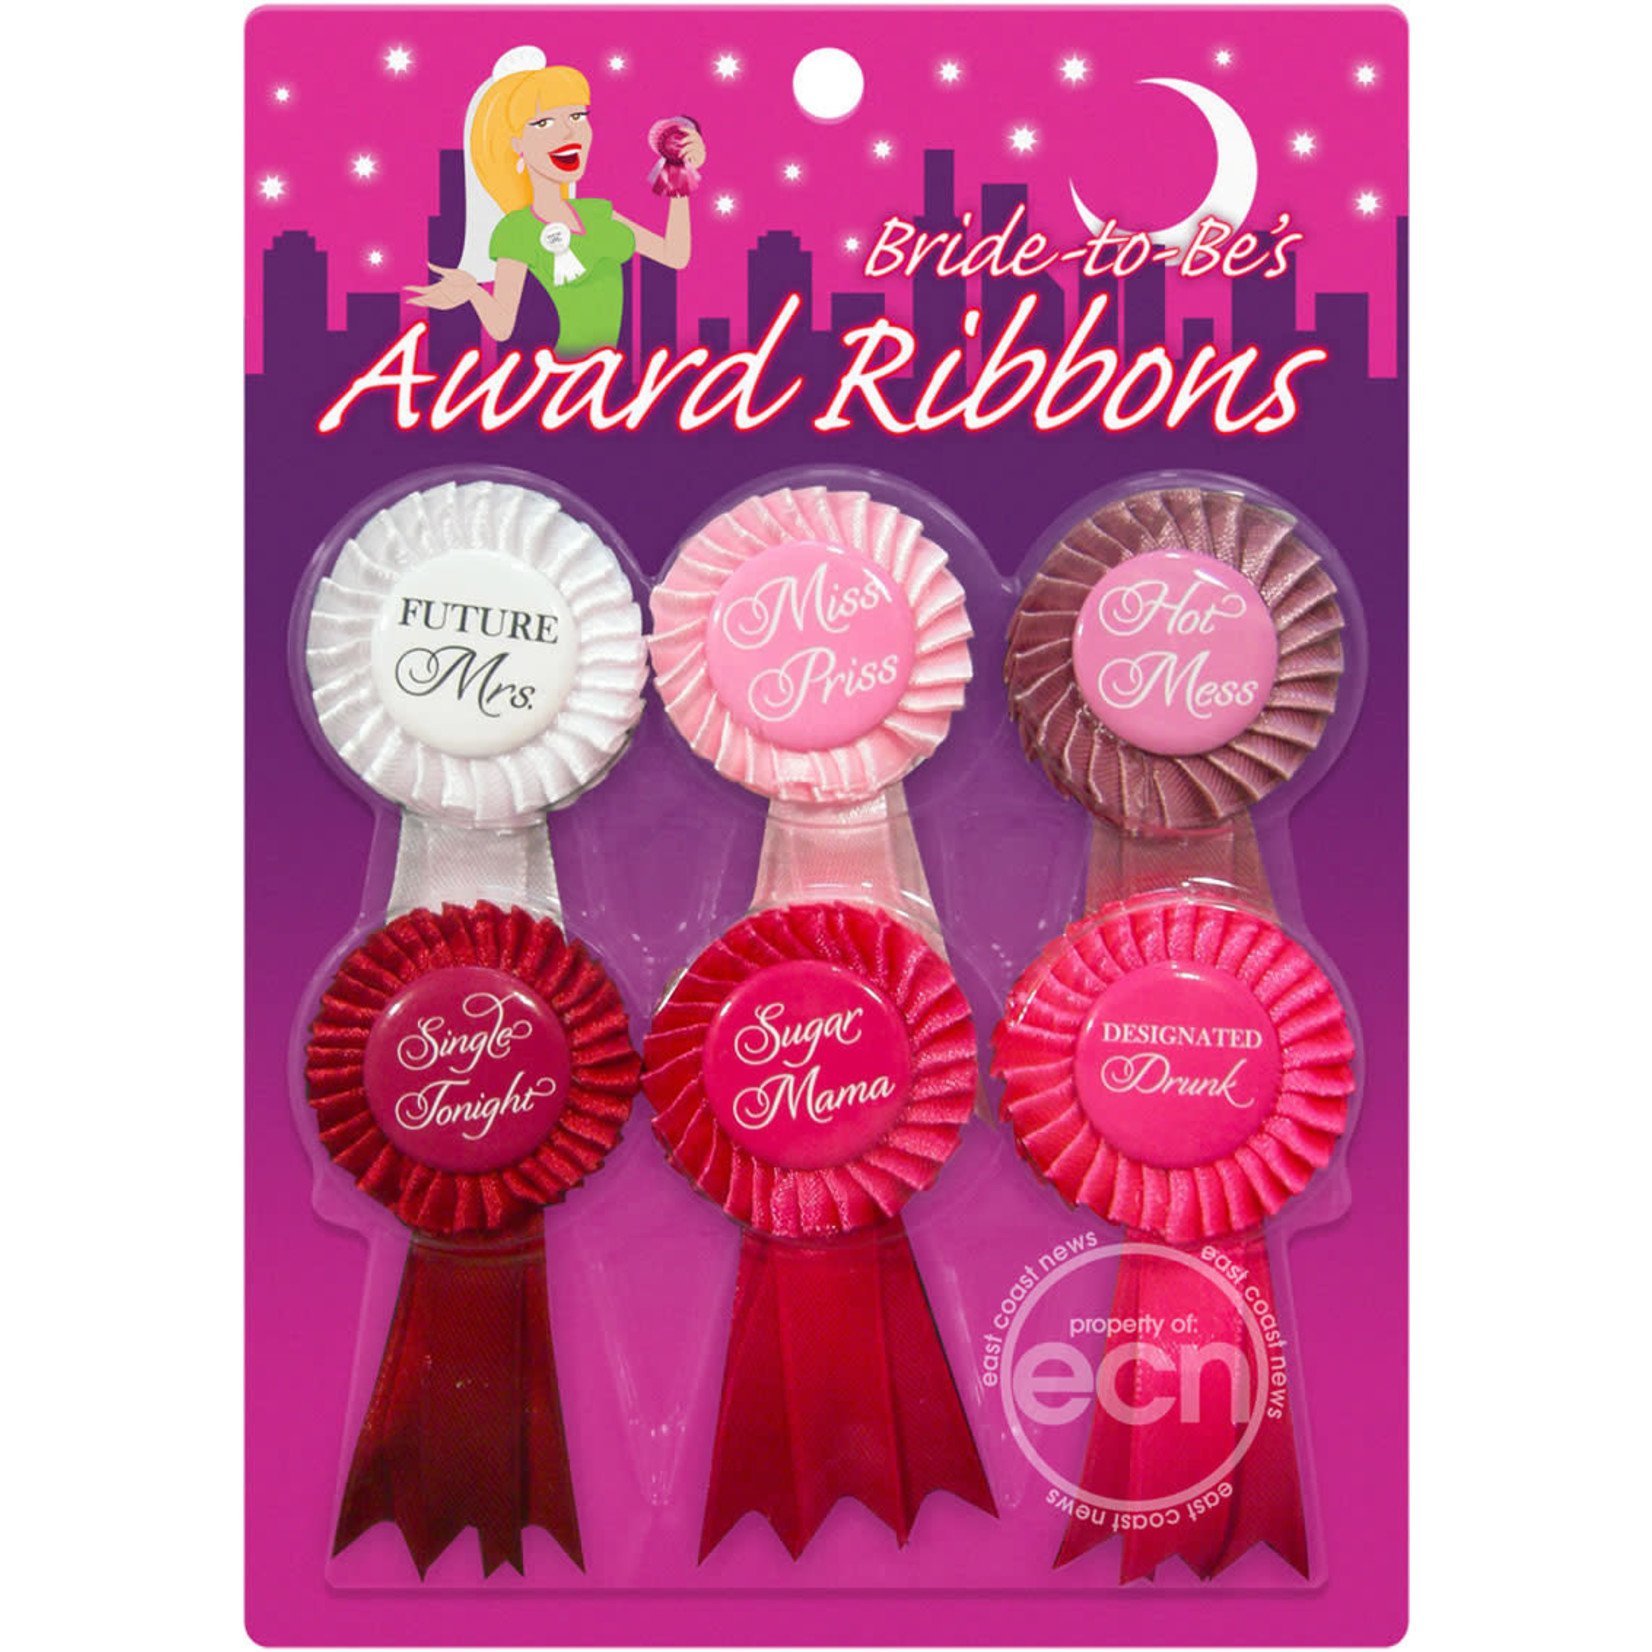 Bride-To-Be's Award Ribbons (6 Per Pack)